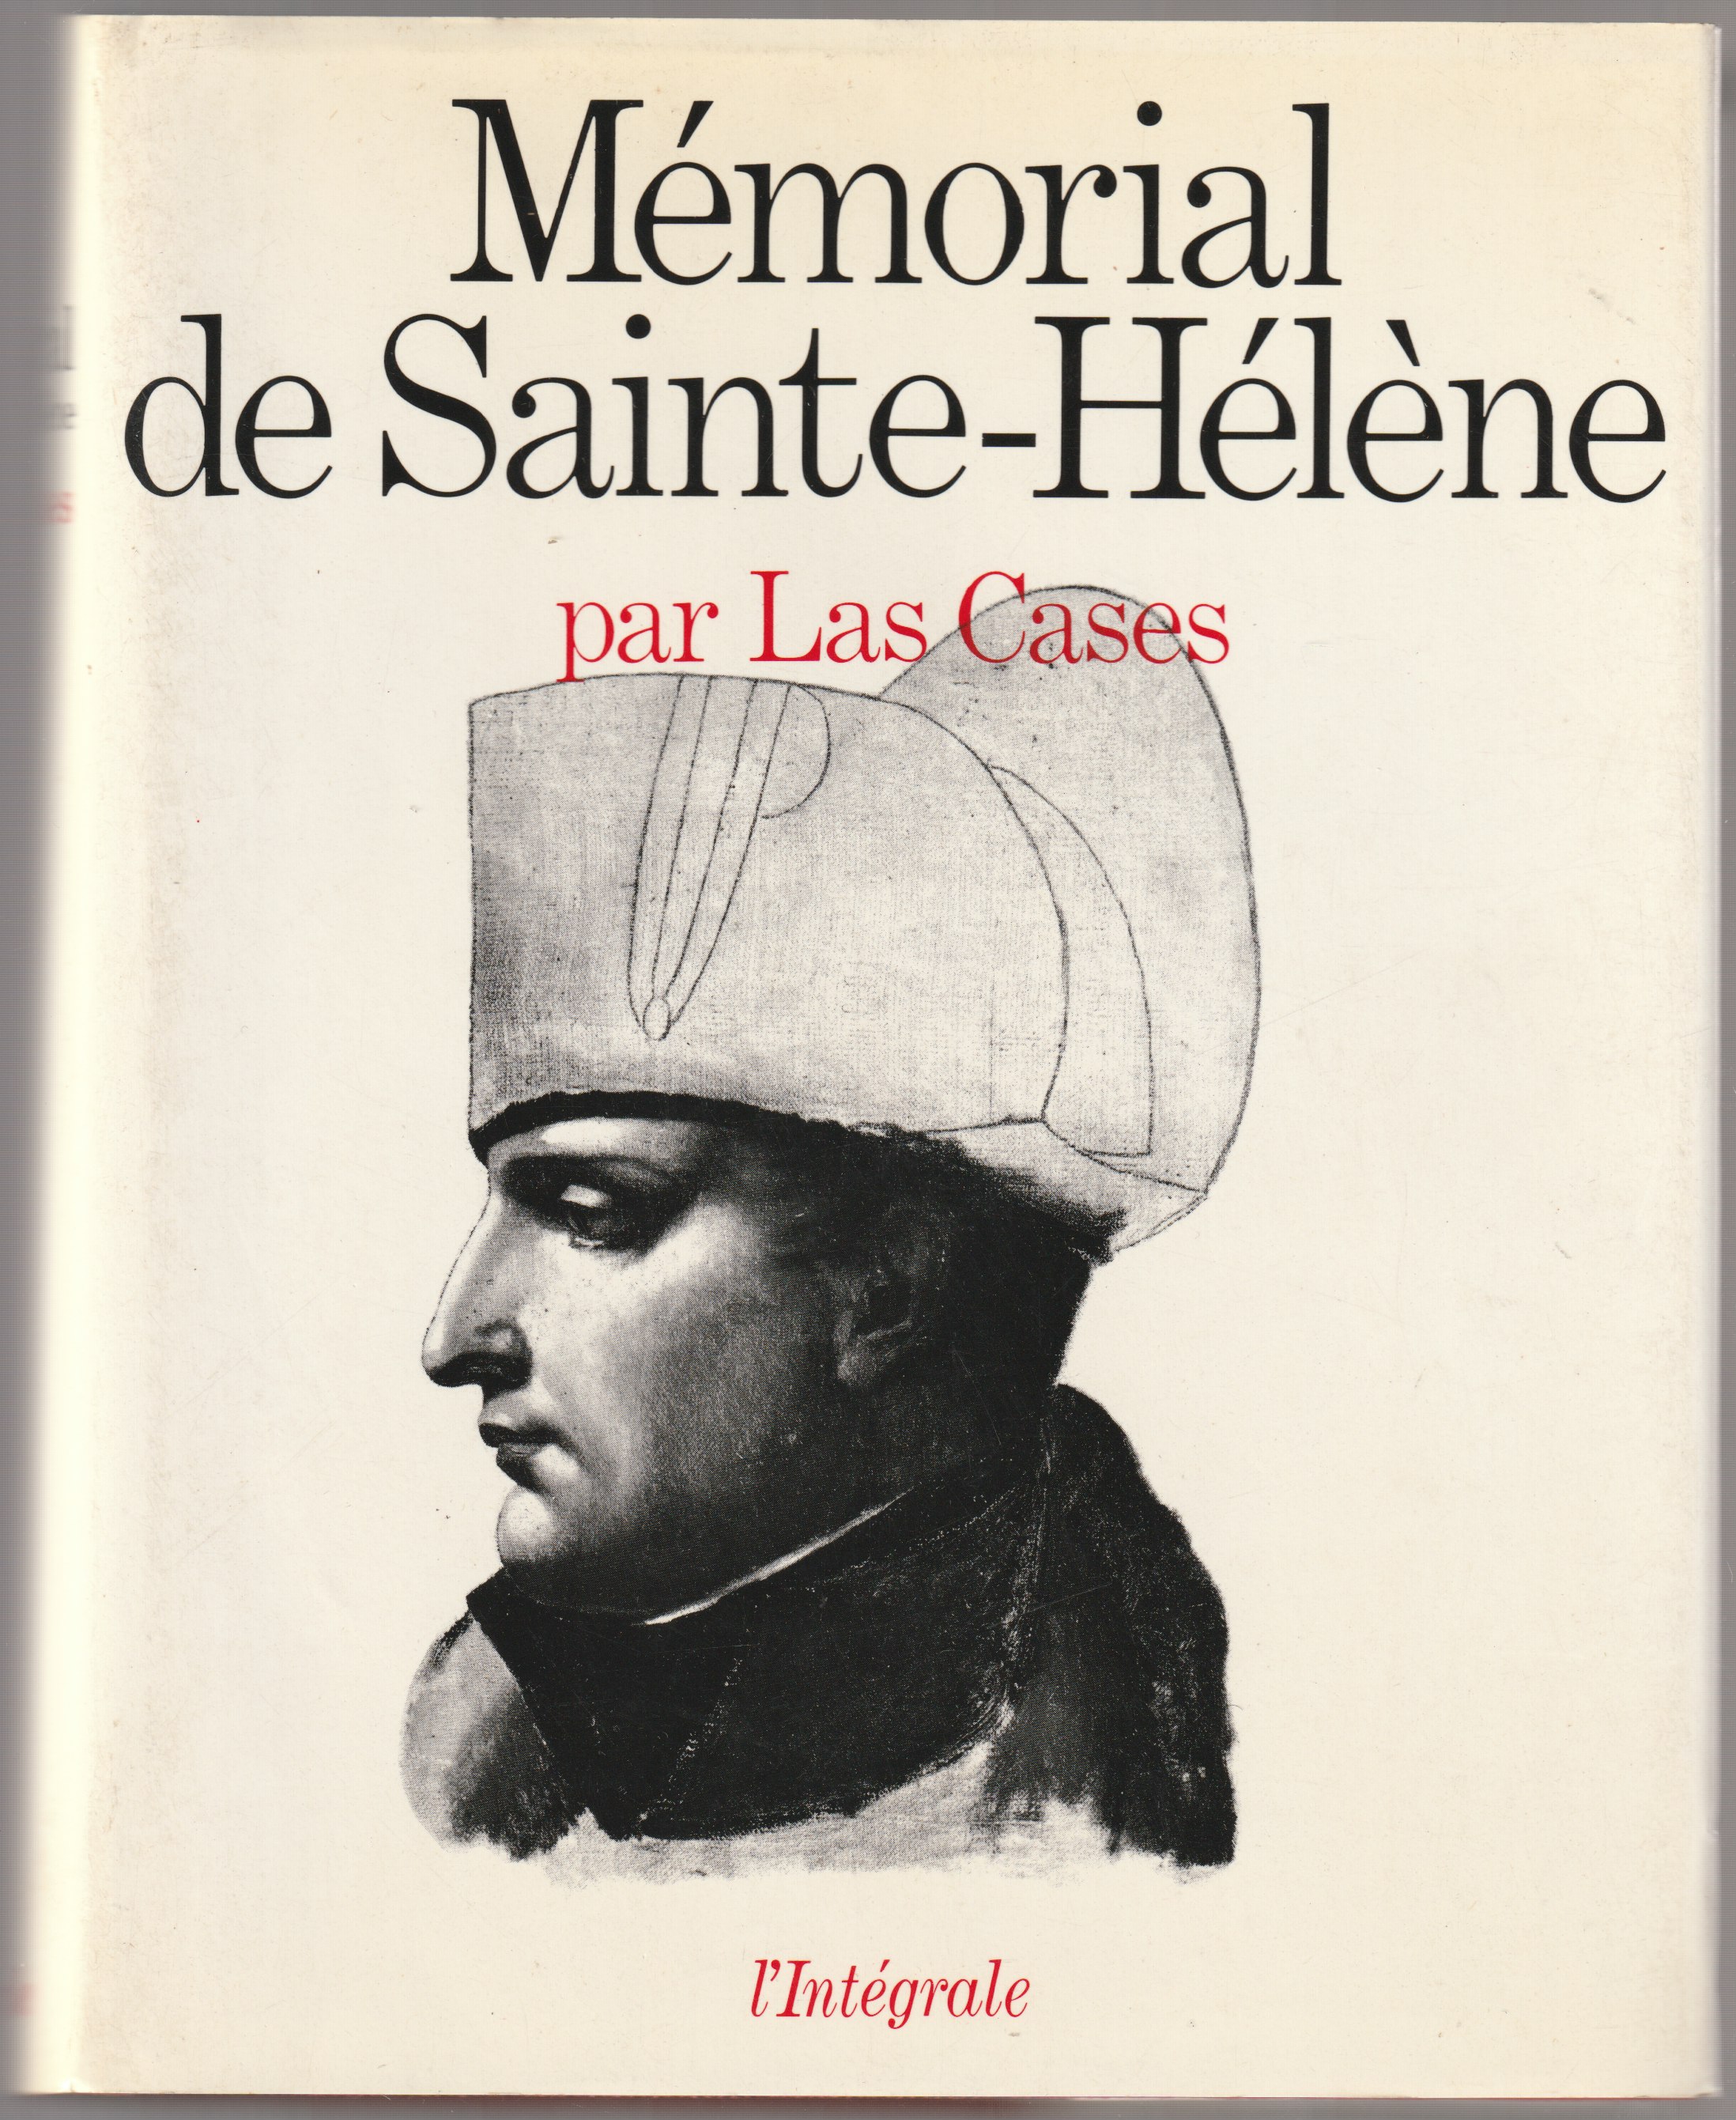 Memorial de Sainte-Helene.